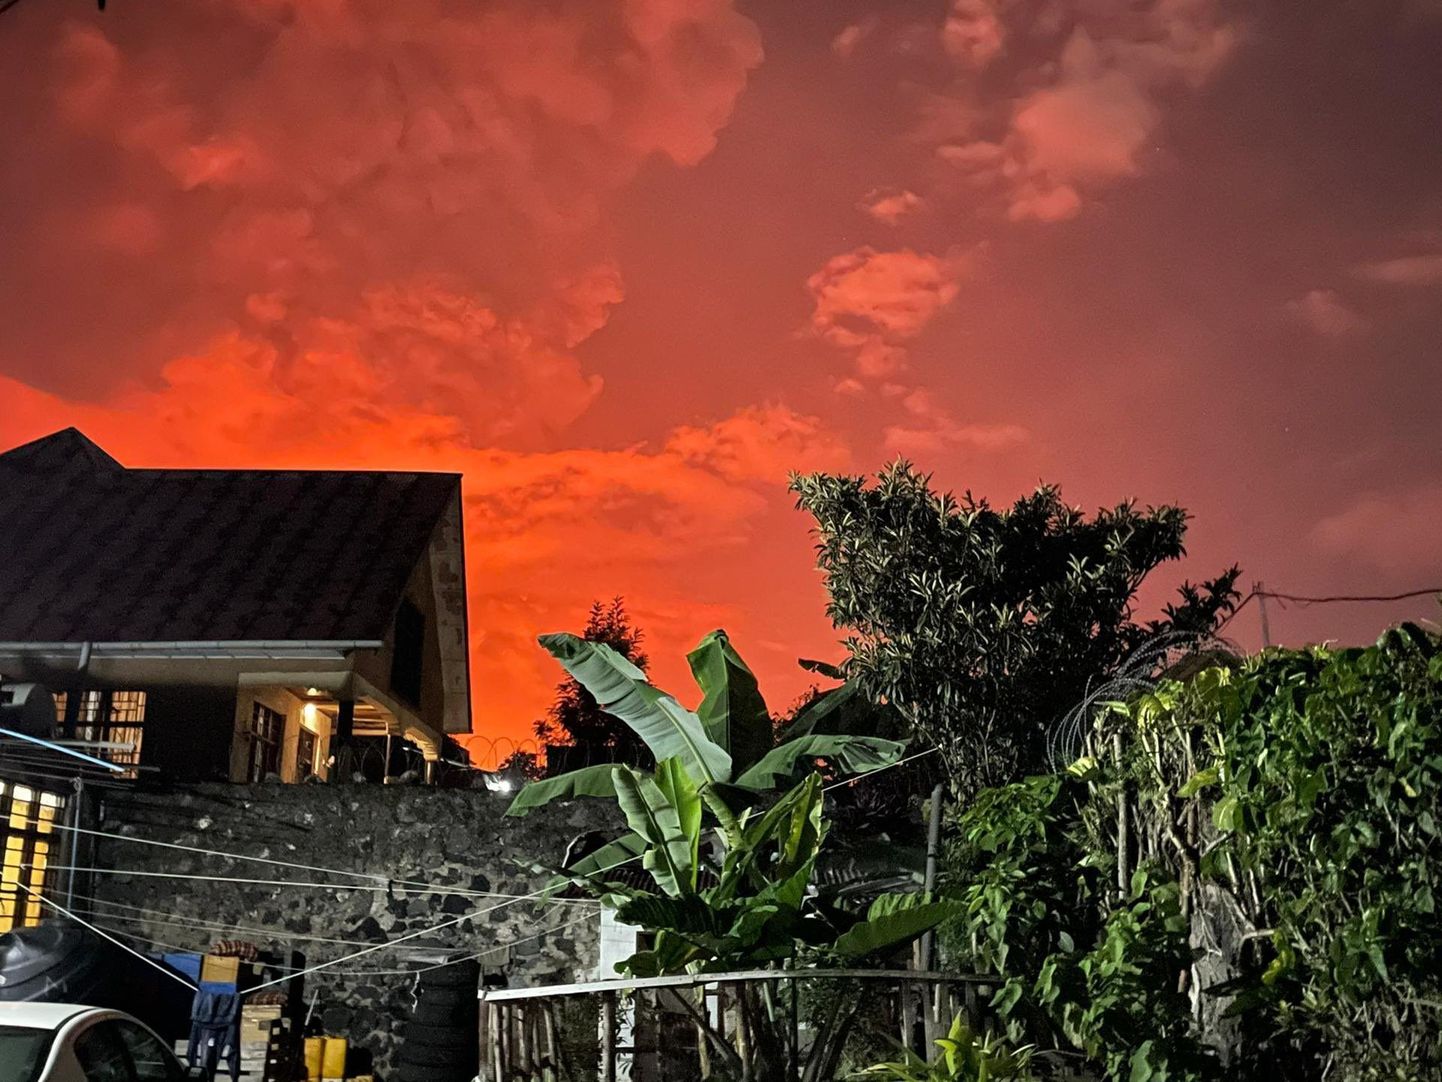 Nyiragongo vulkaani purse värvis taeva Goma linna kohal punaseks. FOTO: Xinhua/Zumapress.com/Scanpix